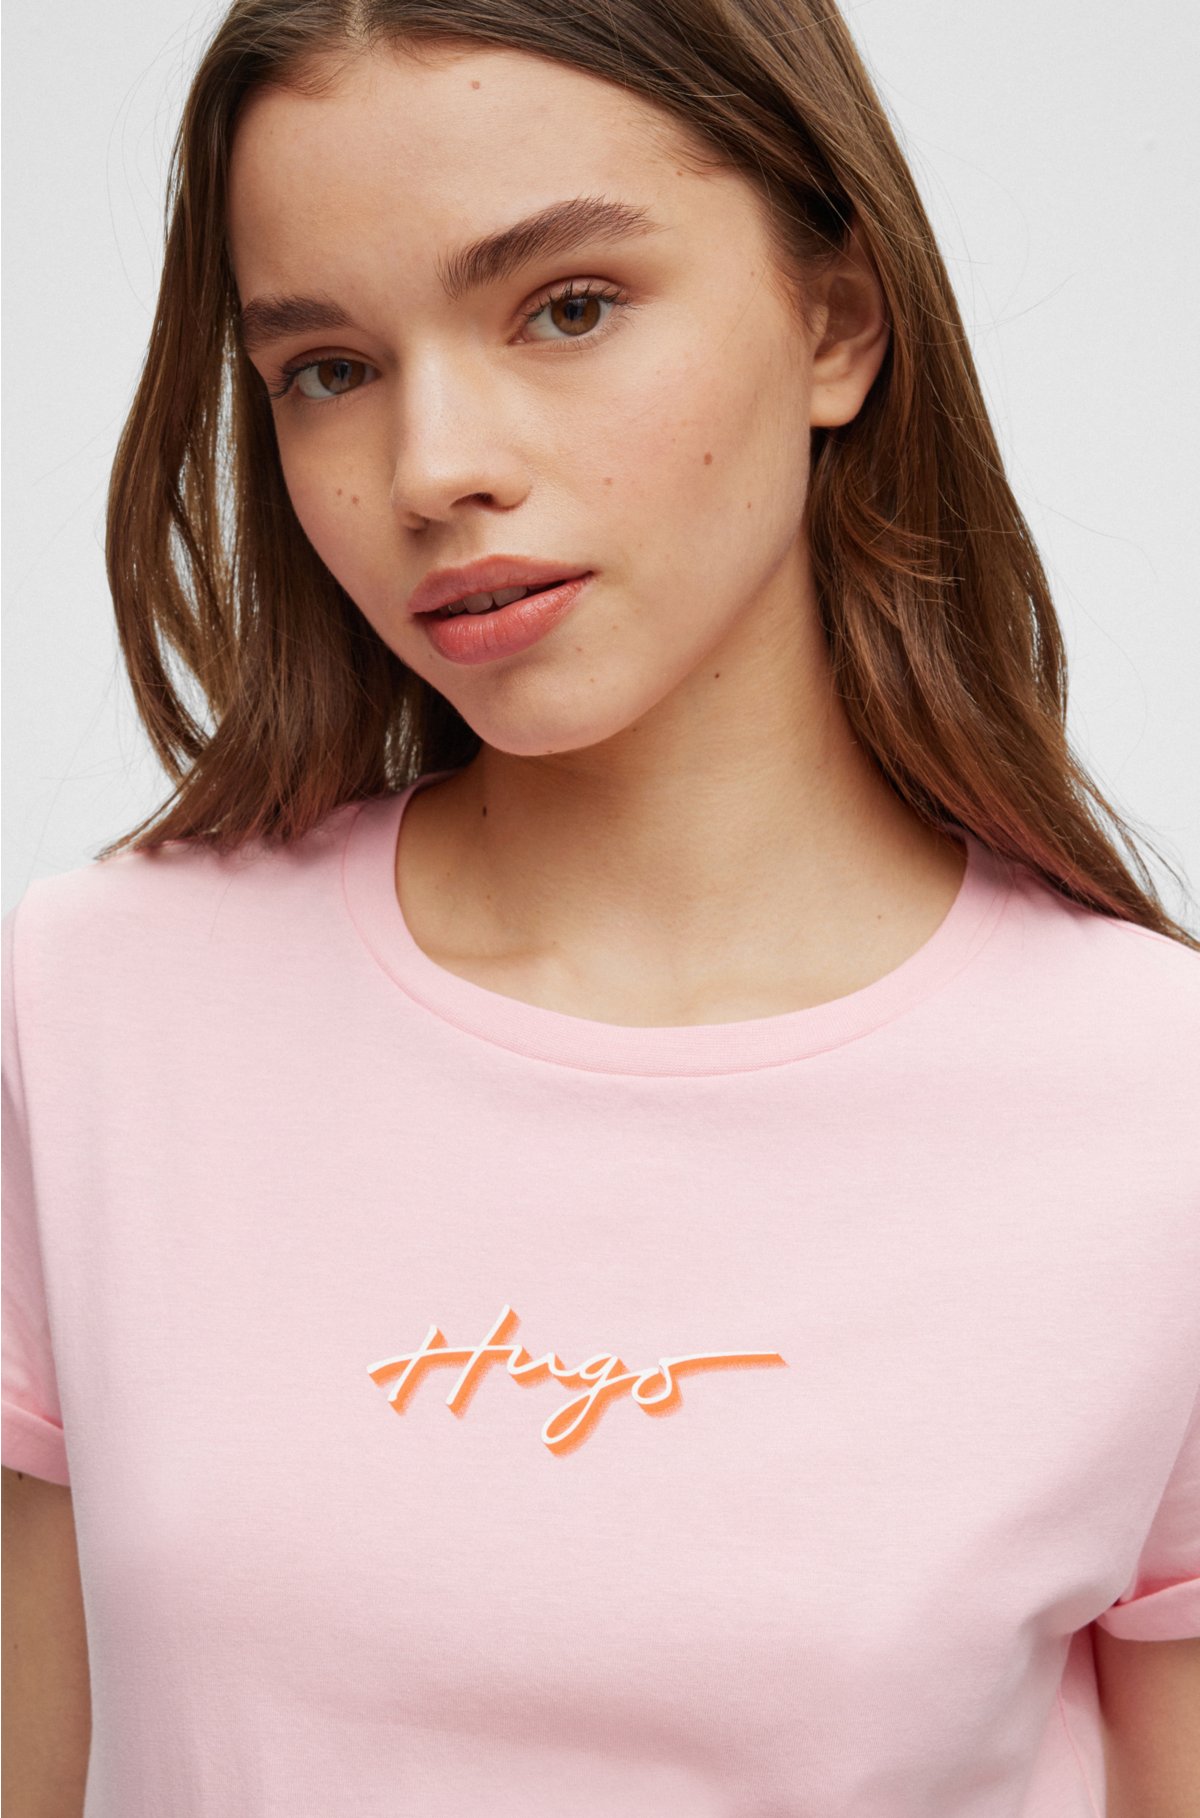 Cotton-jersey slim-fit T-shirt with graffiti-style logo, light pink